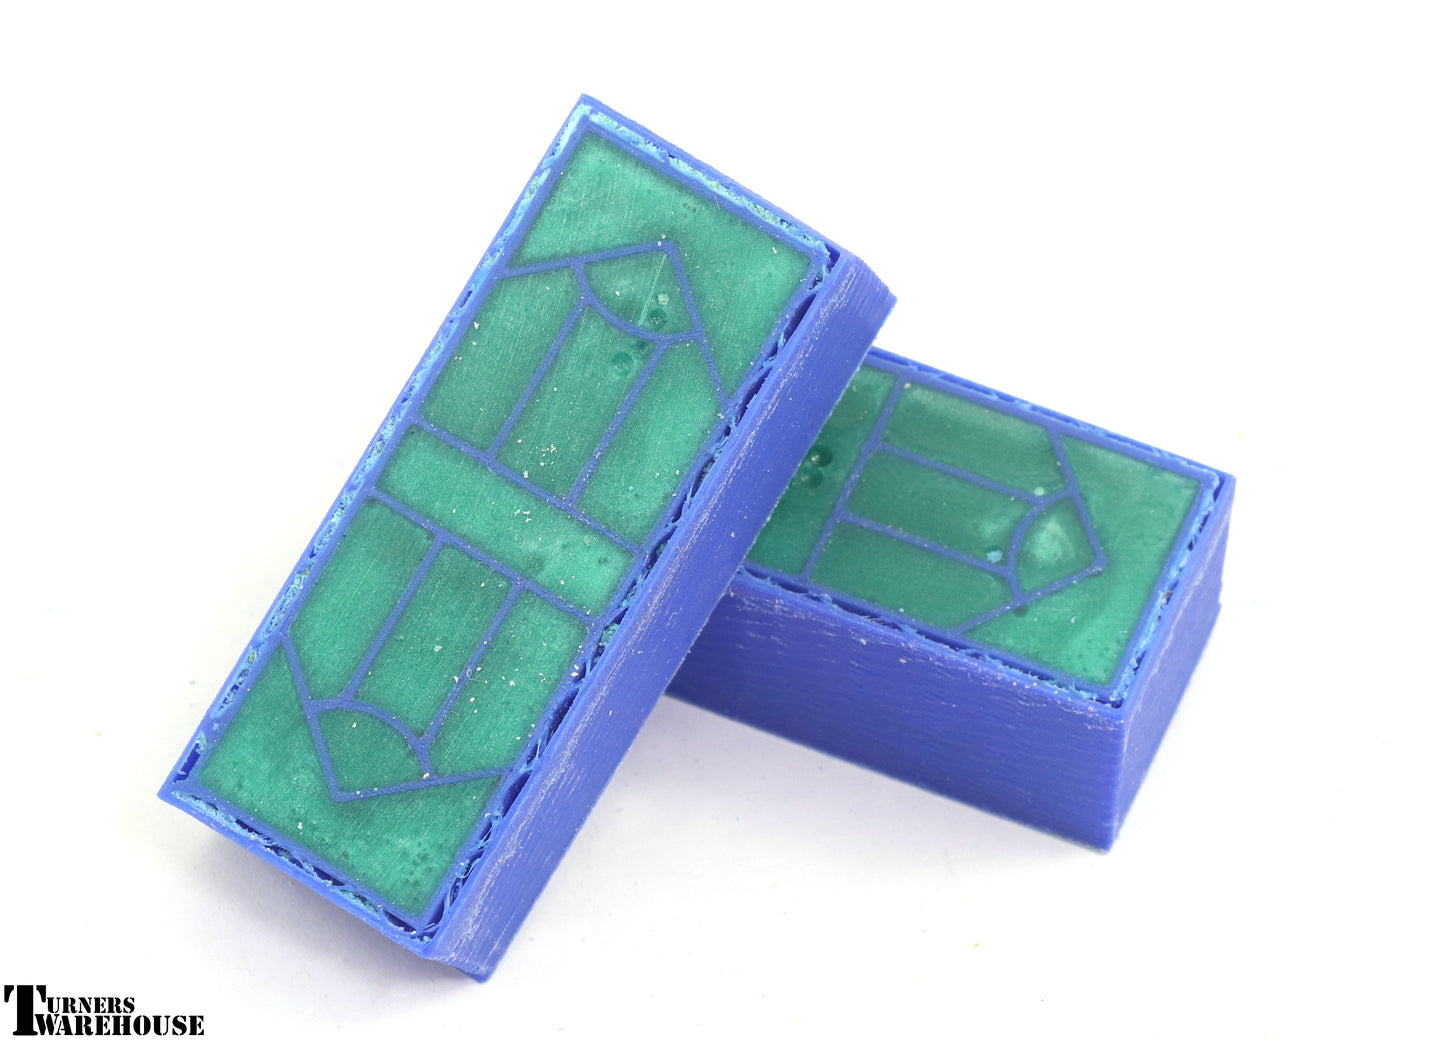 3D Printed or Honeycomb Pen Blanks